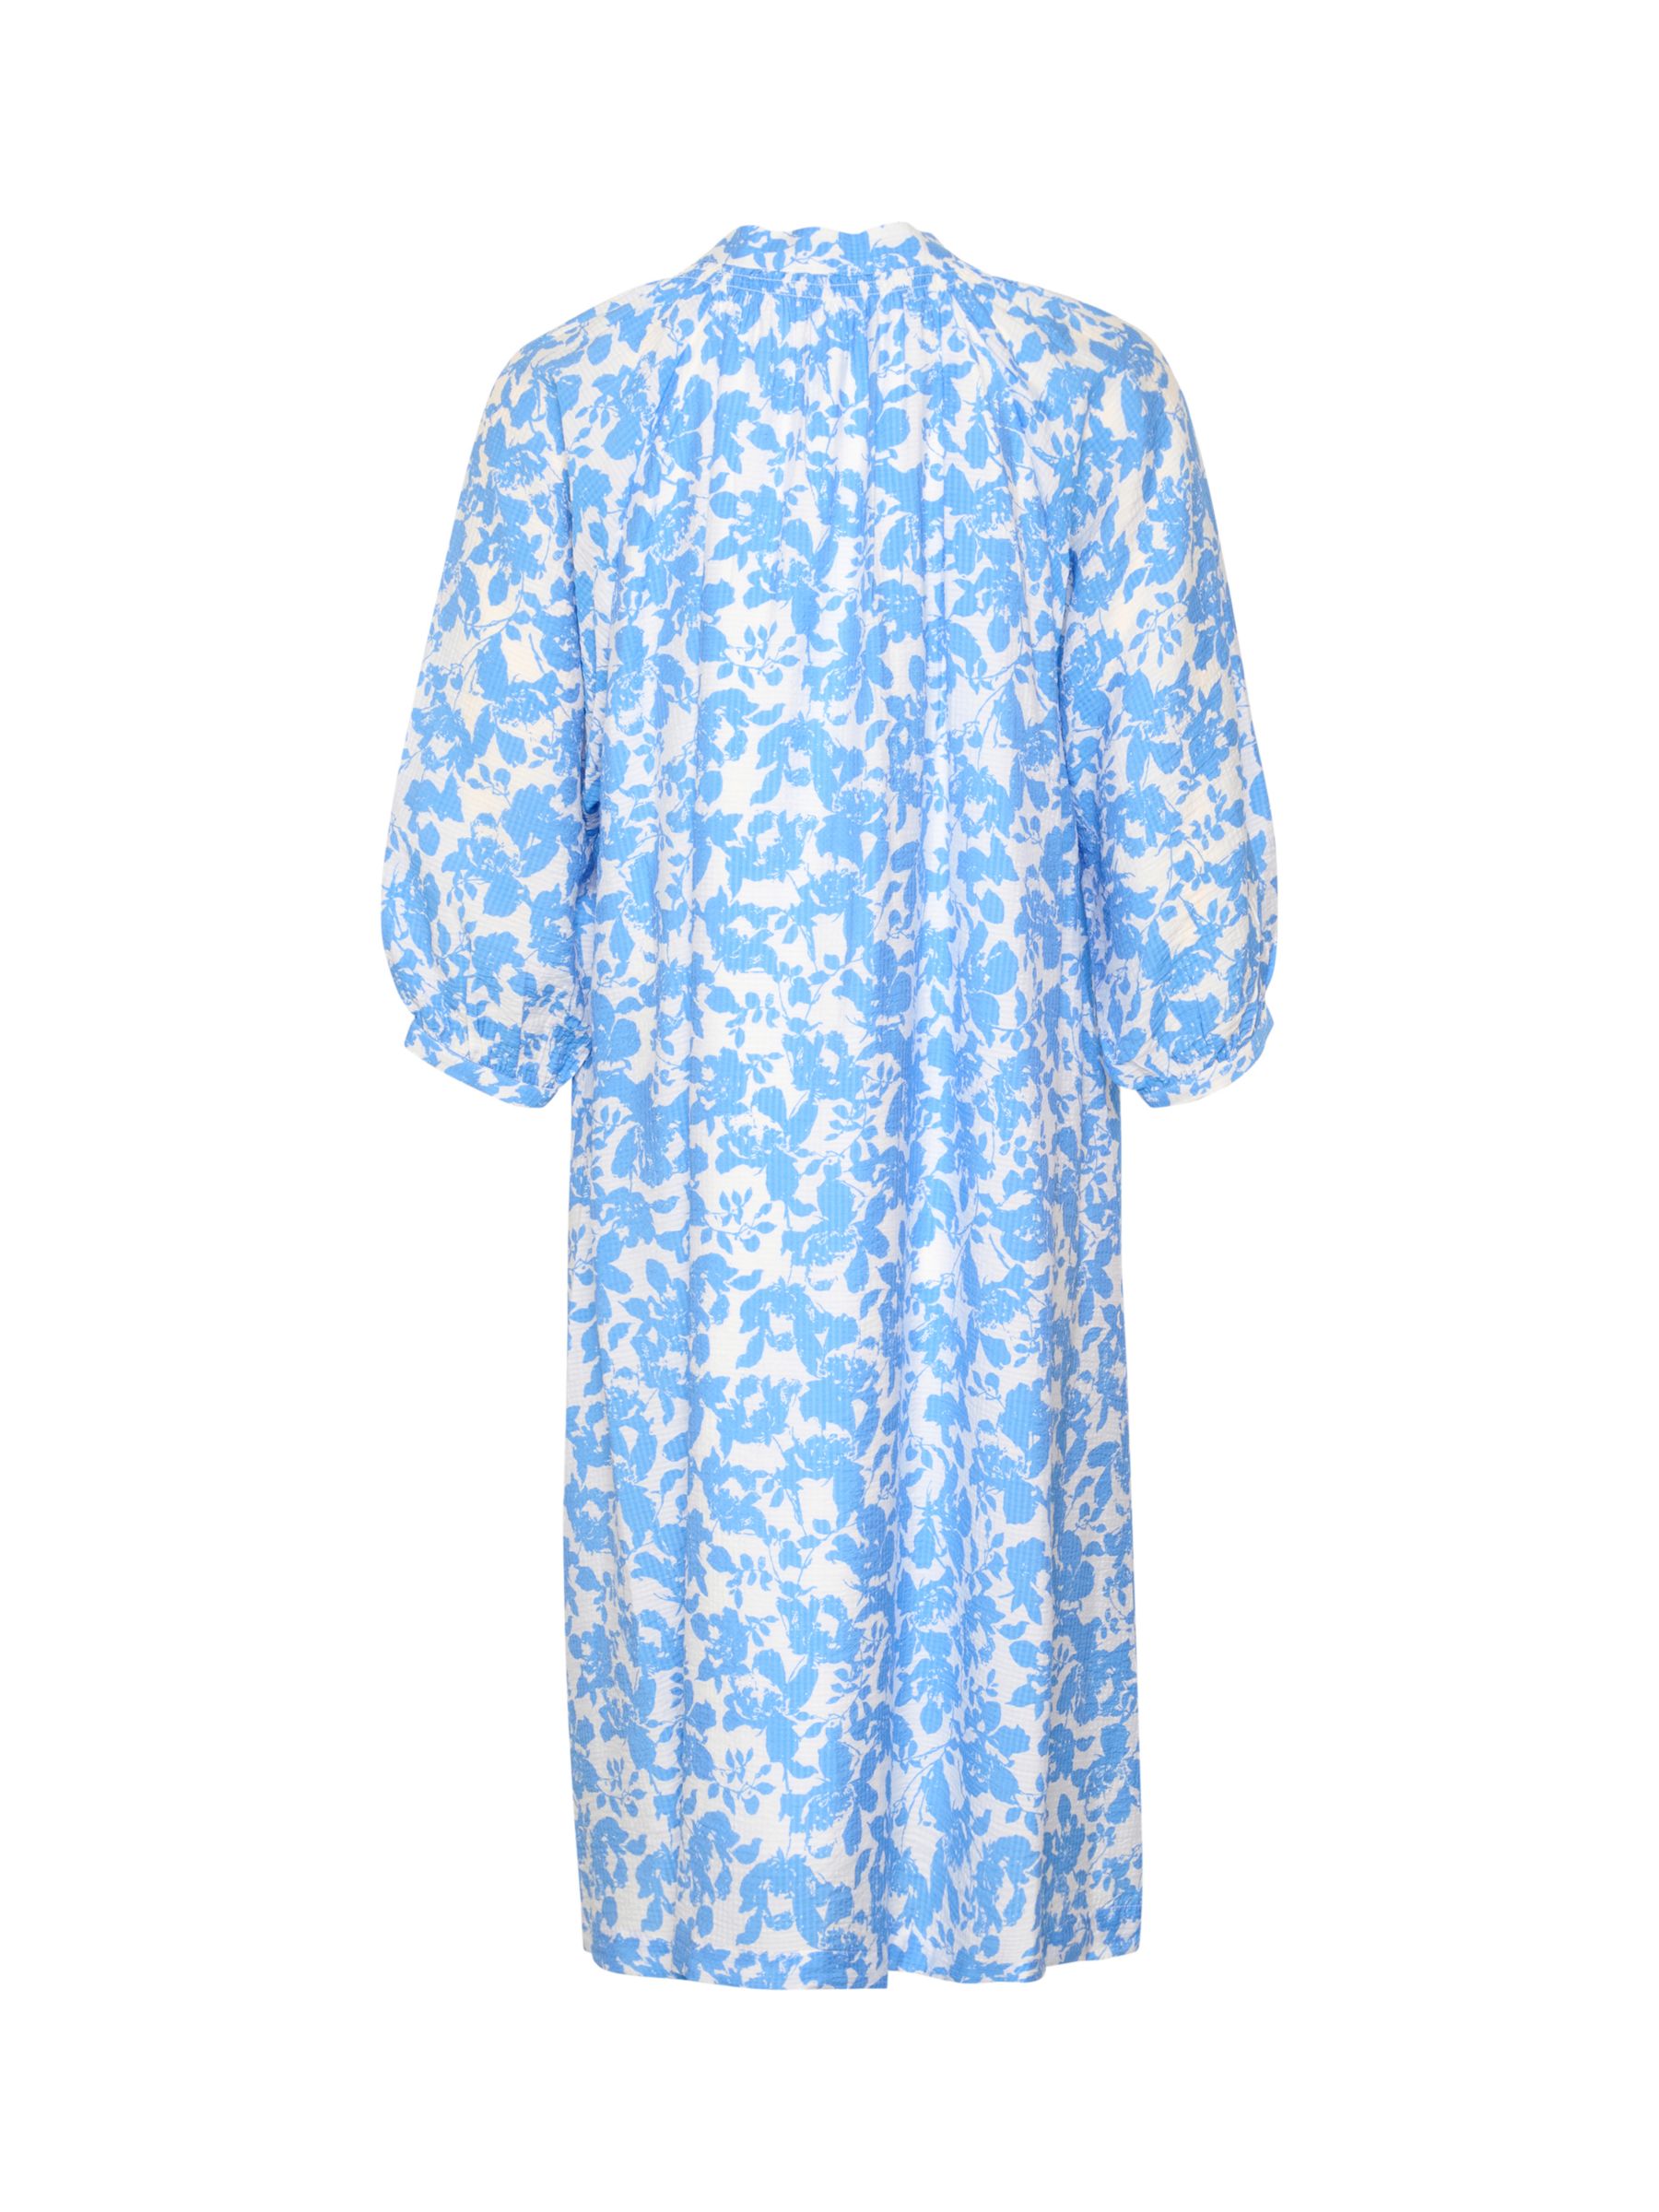 Saint Tropez Daphne Abstract Floral Print Slip Dress, Ultramarine, XS